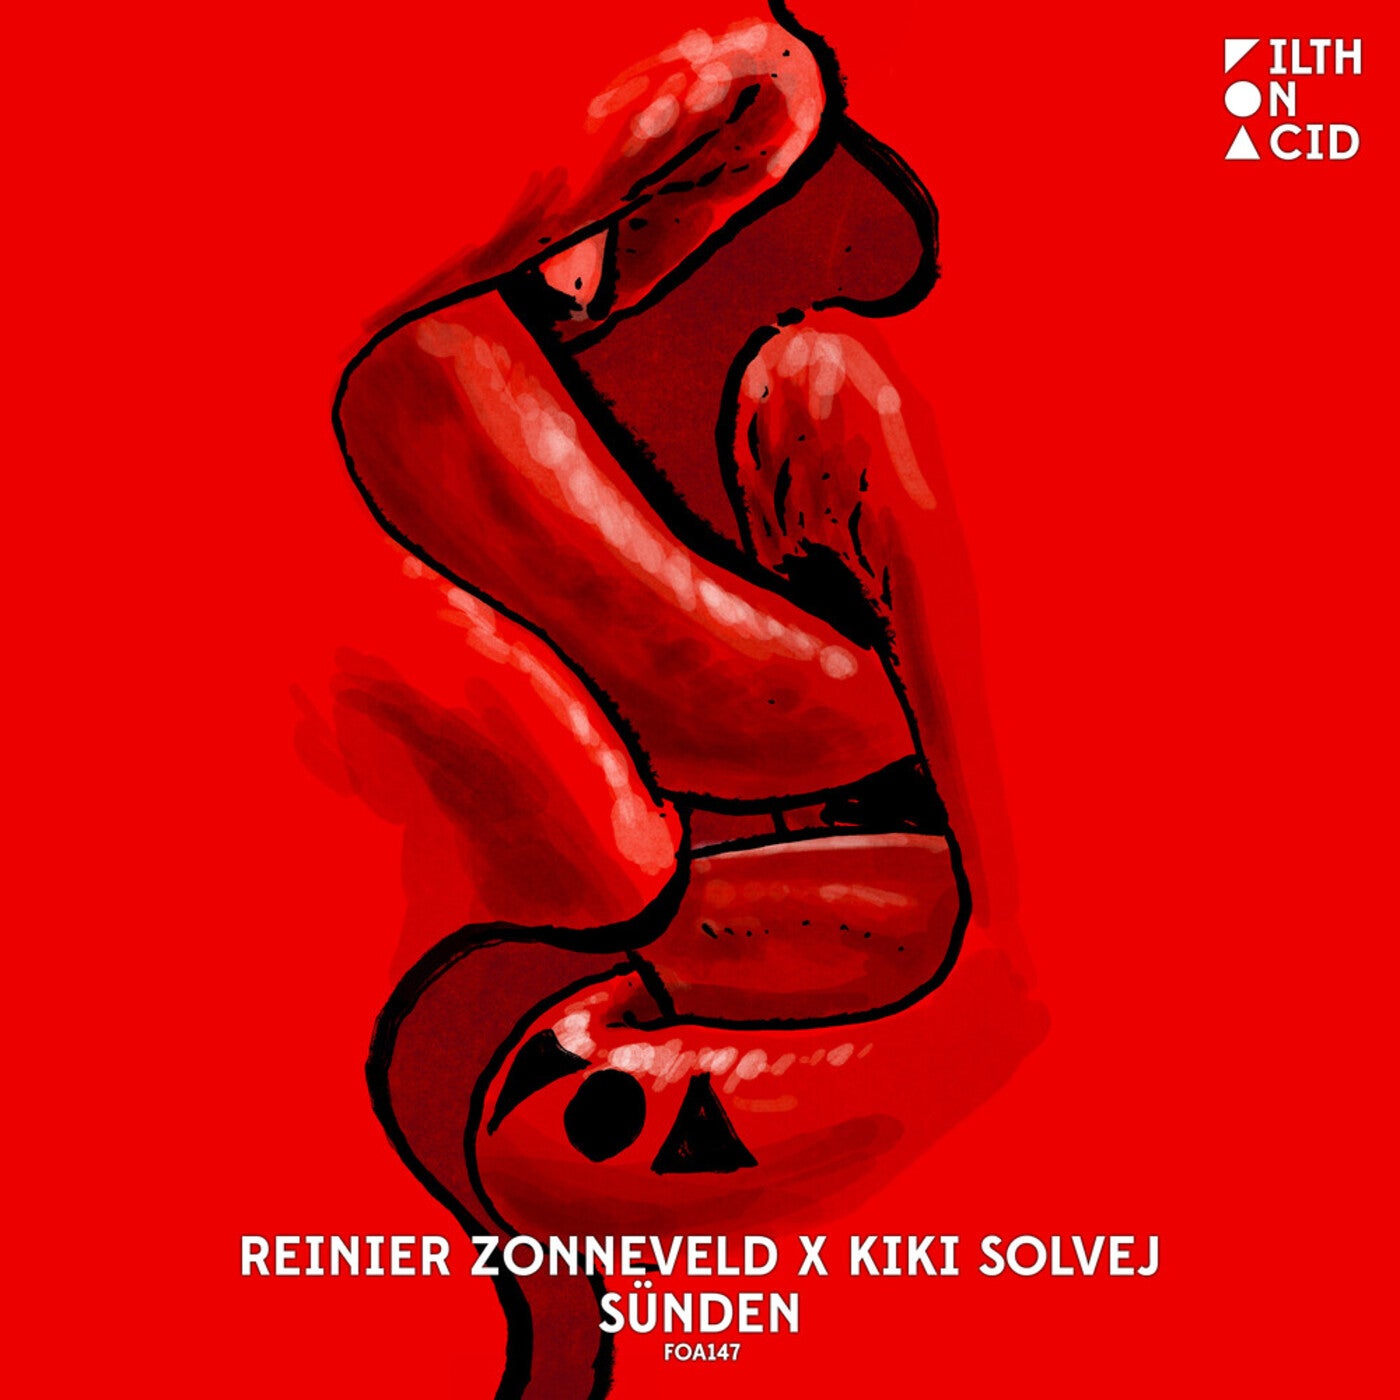 image cover: Reinier Zonneveld, Kiki Solvej - Sünden on Filth on Acid